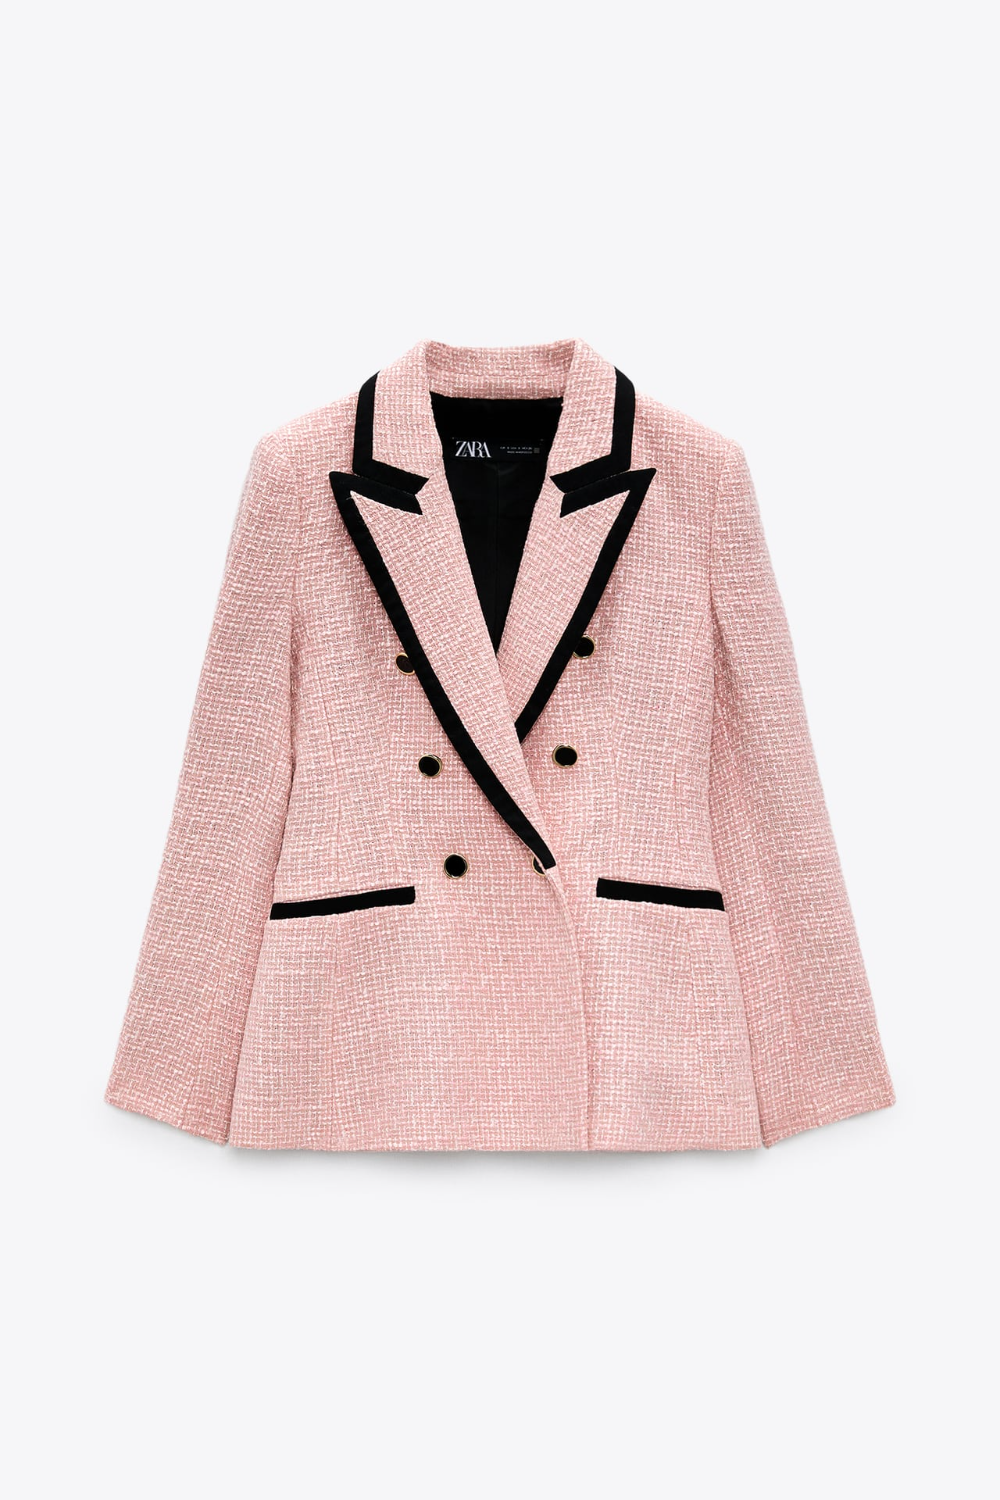 https://flyfiercefab.com/wp-content/uploads/2021/12/Zara-Pink-and-Black-Contrast-Blazer.png